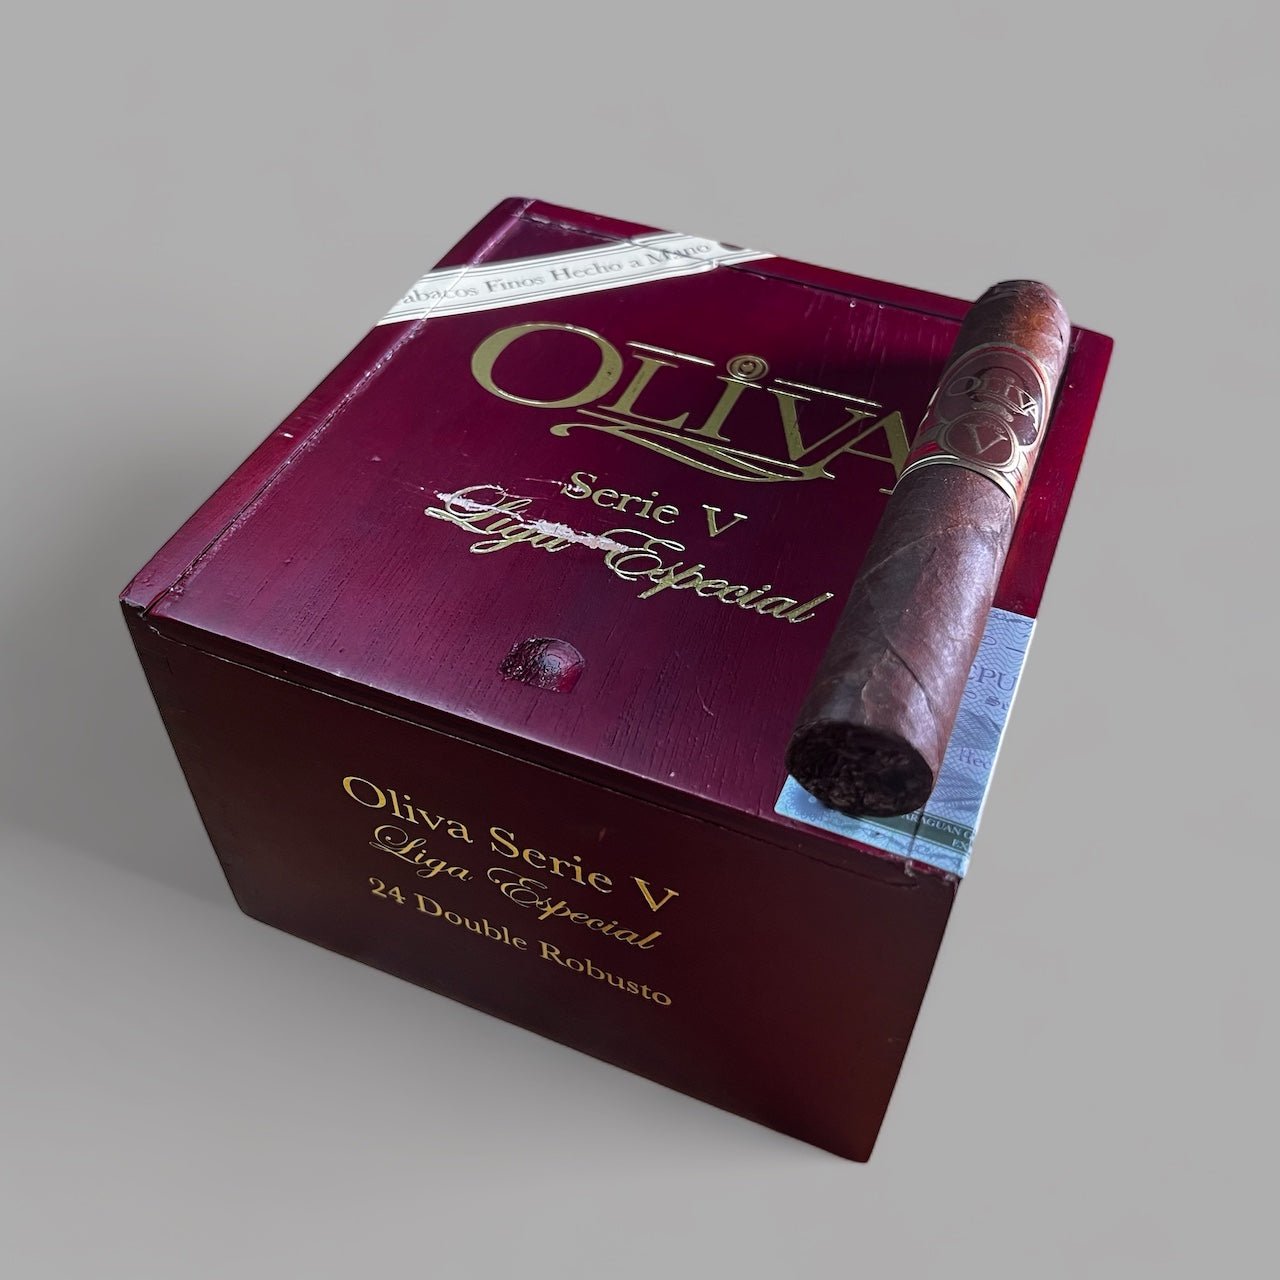 Oliva Serie V Double Robusto - Cigar 30